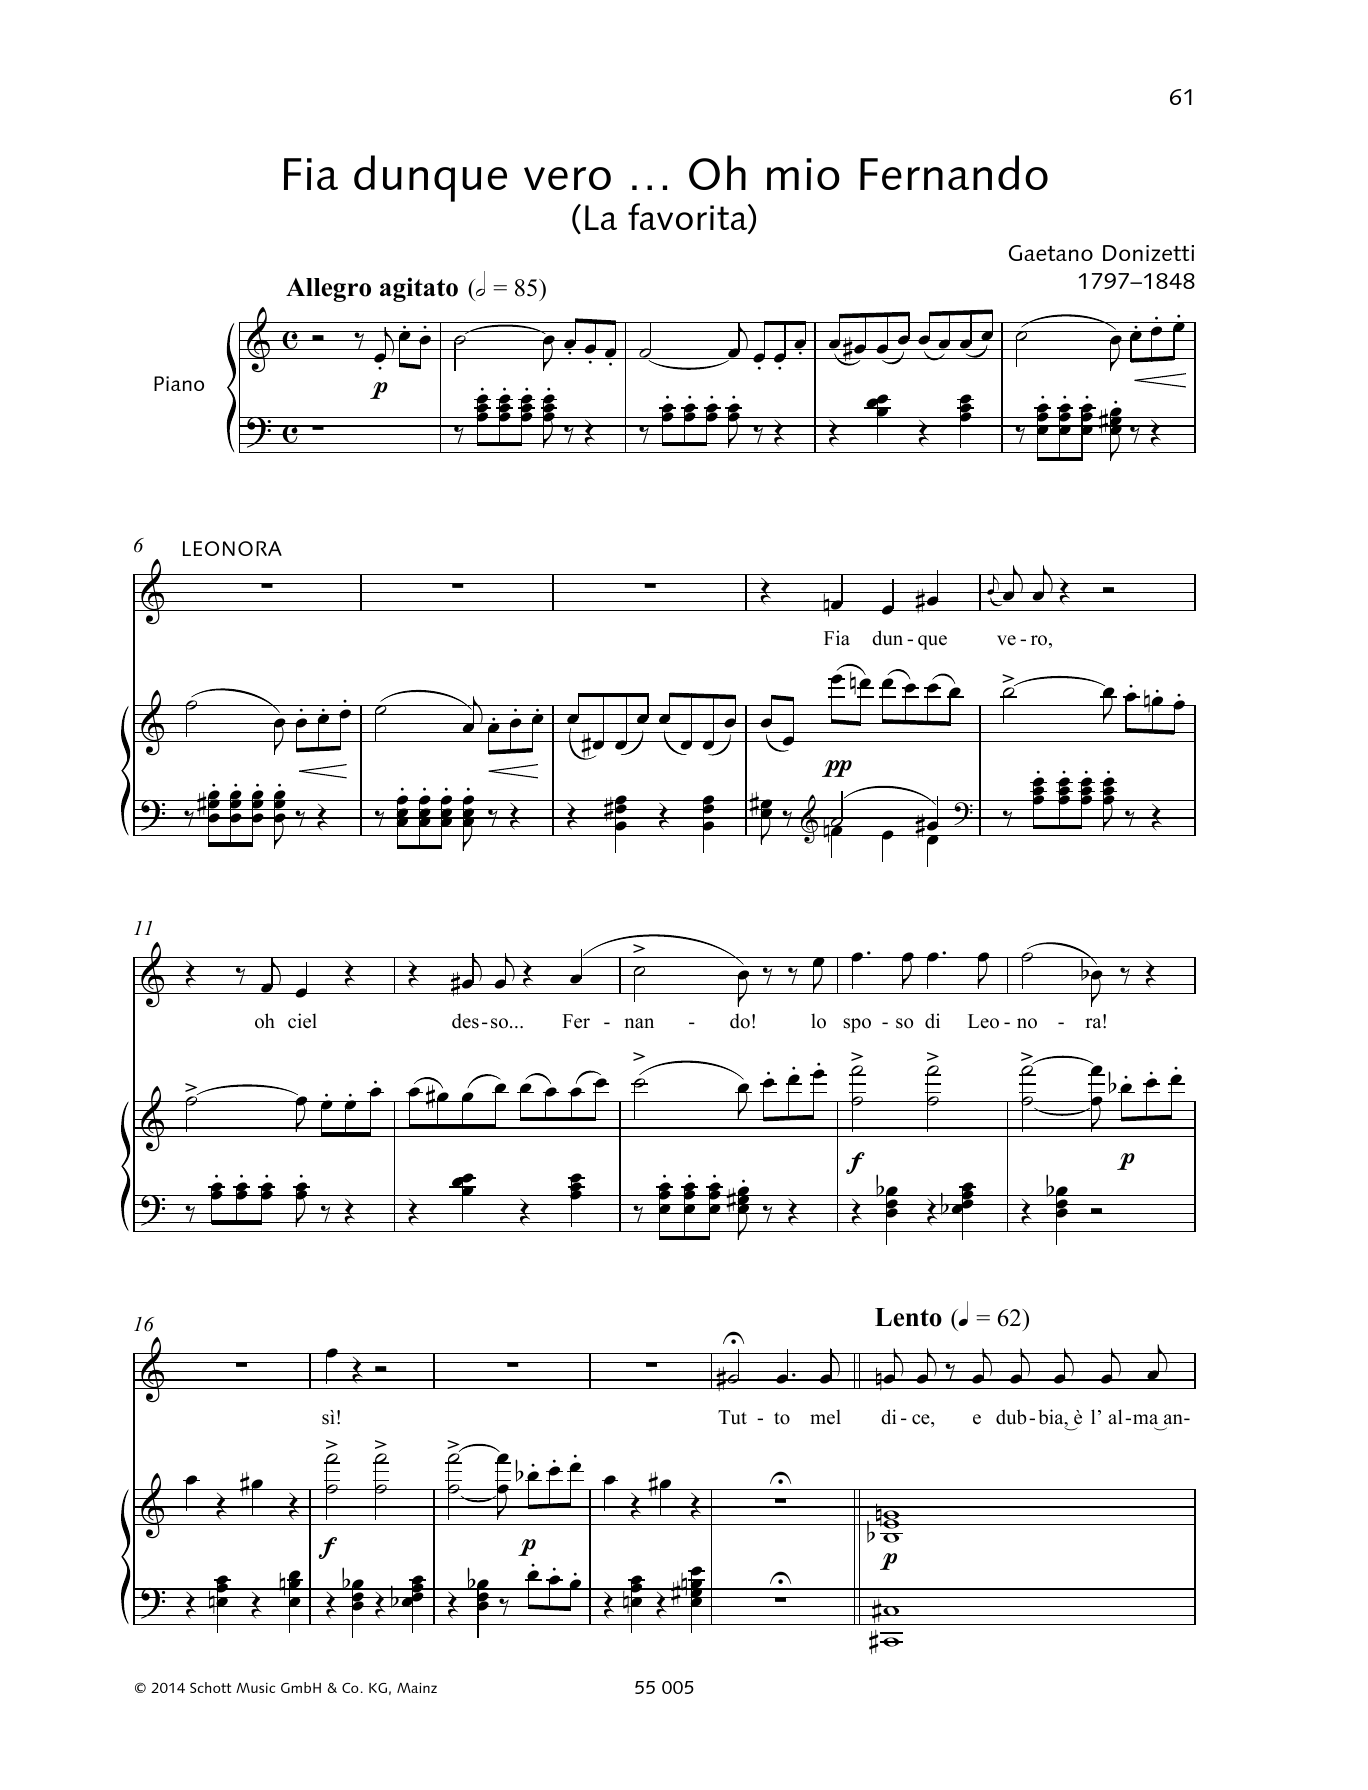 Gaetano Donizetti Fia dunque vero... Oh mio Fernando sheet music notes and chords arranged for Piano & Vocal